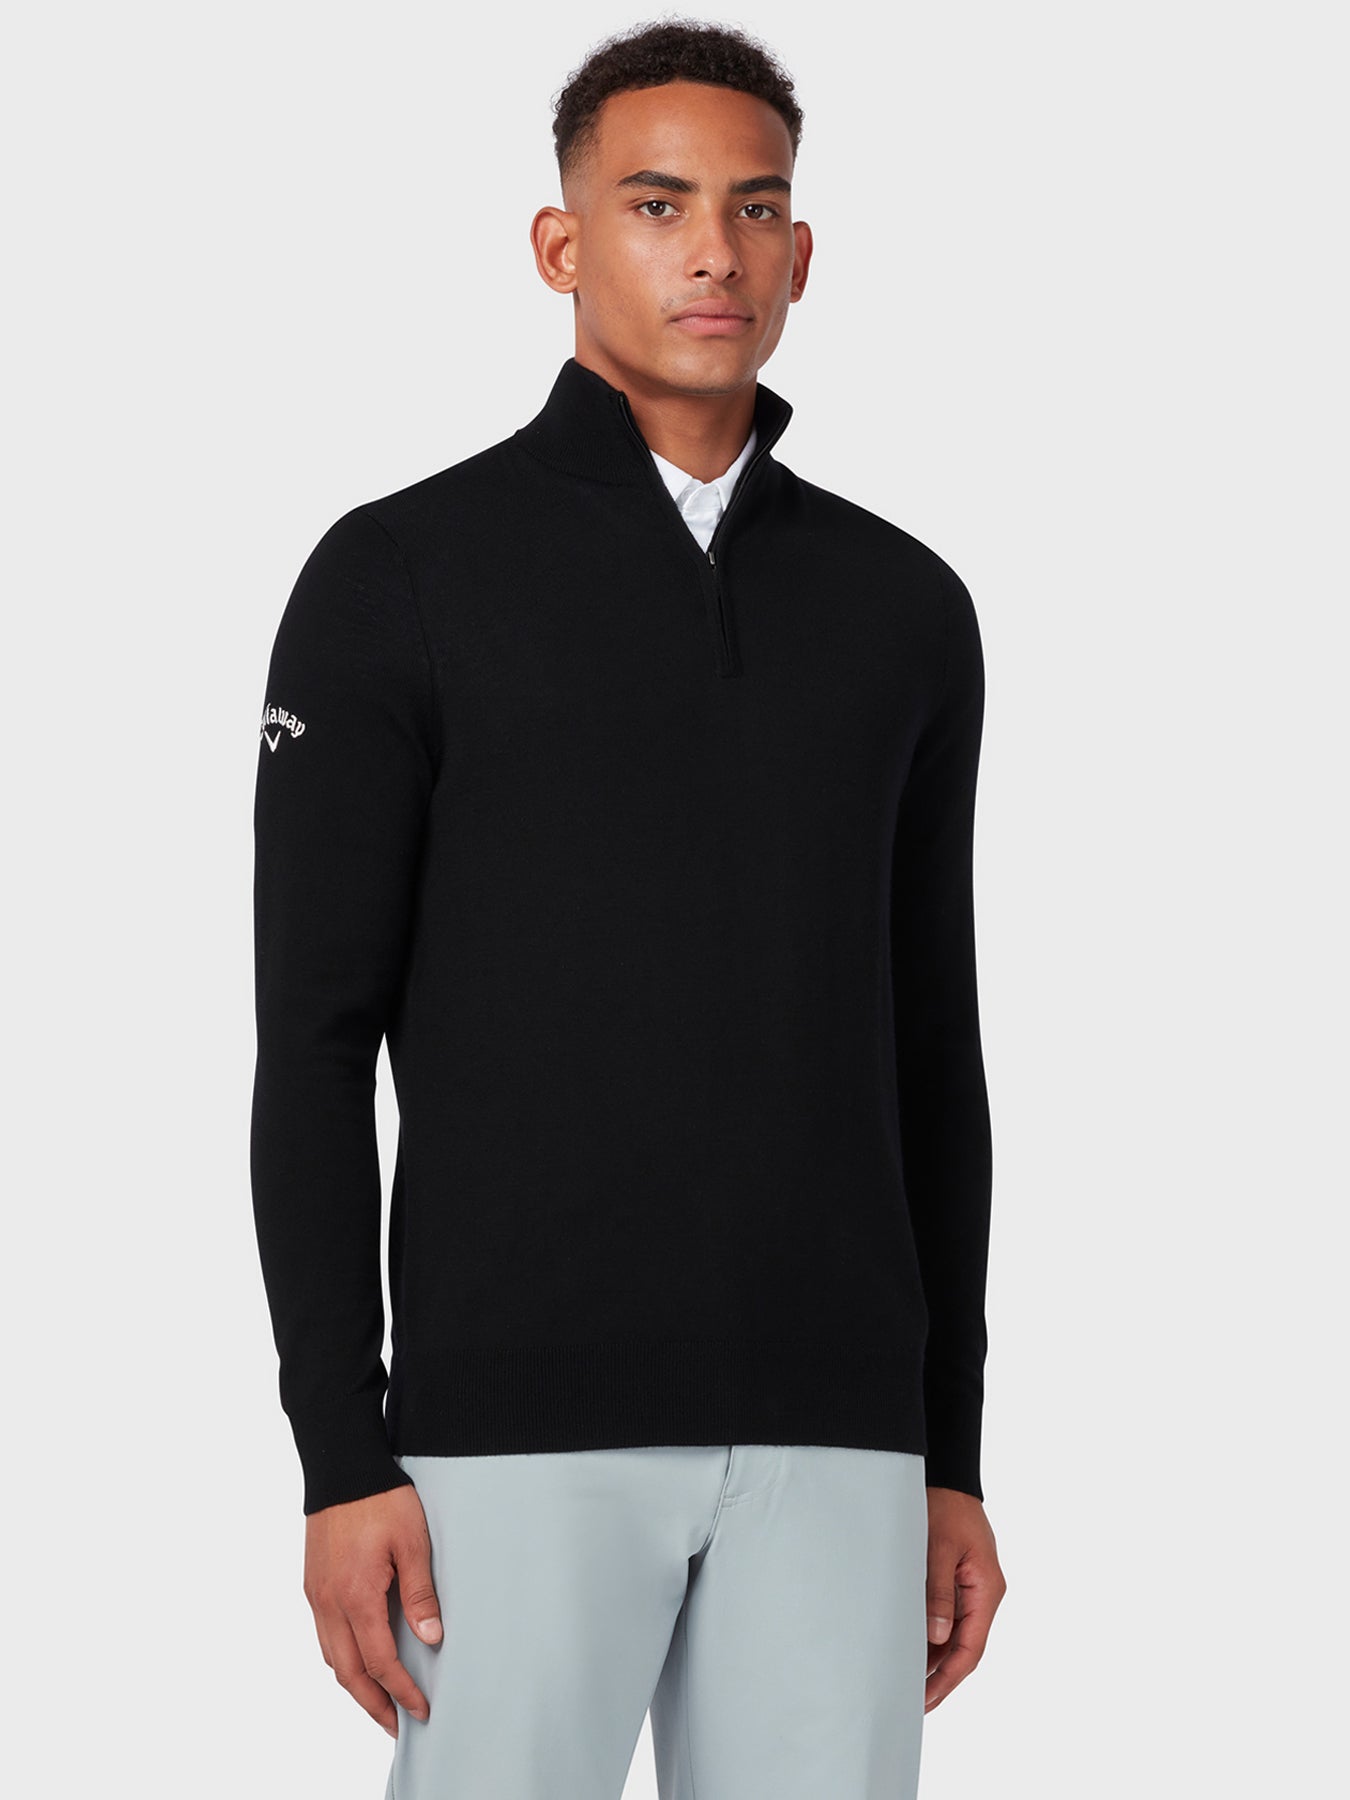 View Thermal Merino Wool Quarter Zip Sweater In Black Onyx Black Onyx XS information